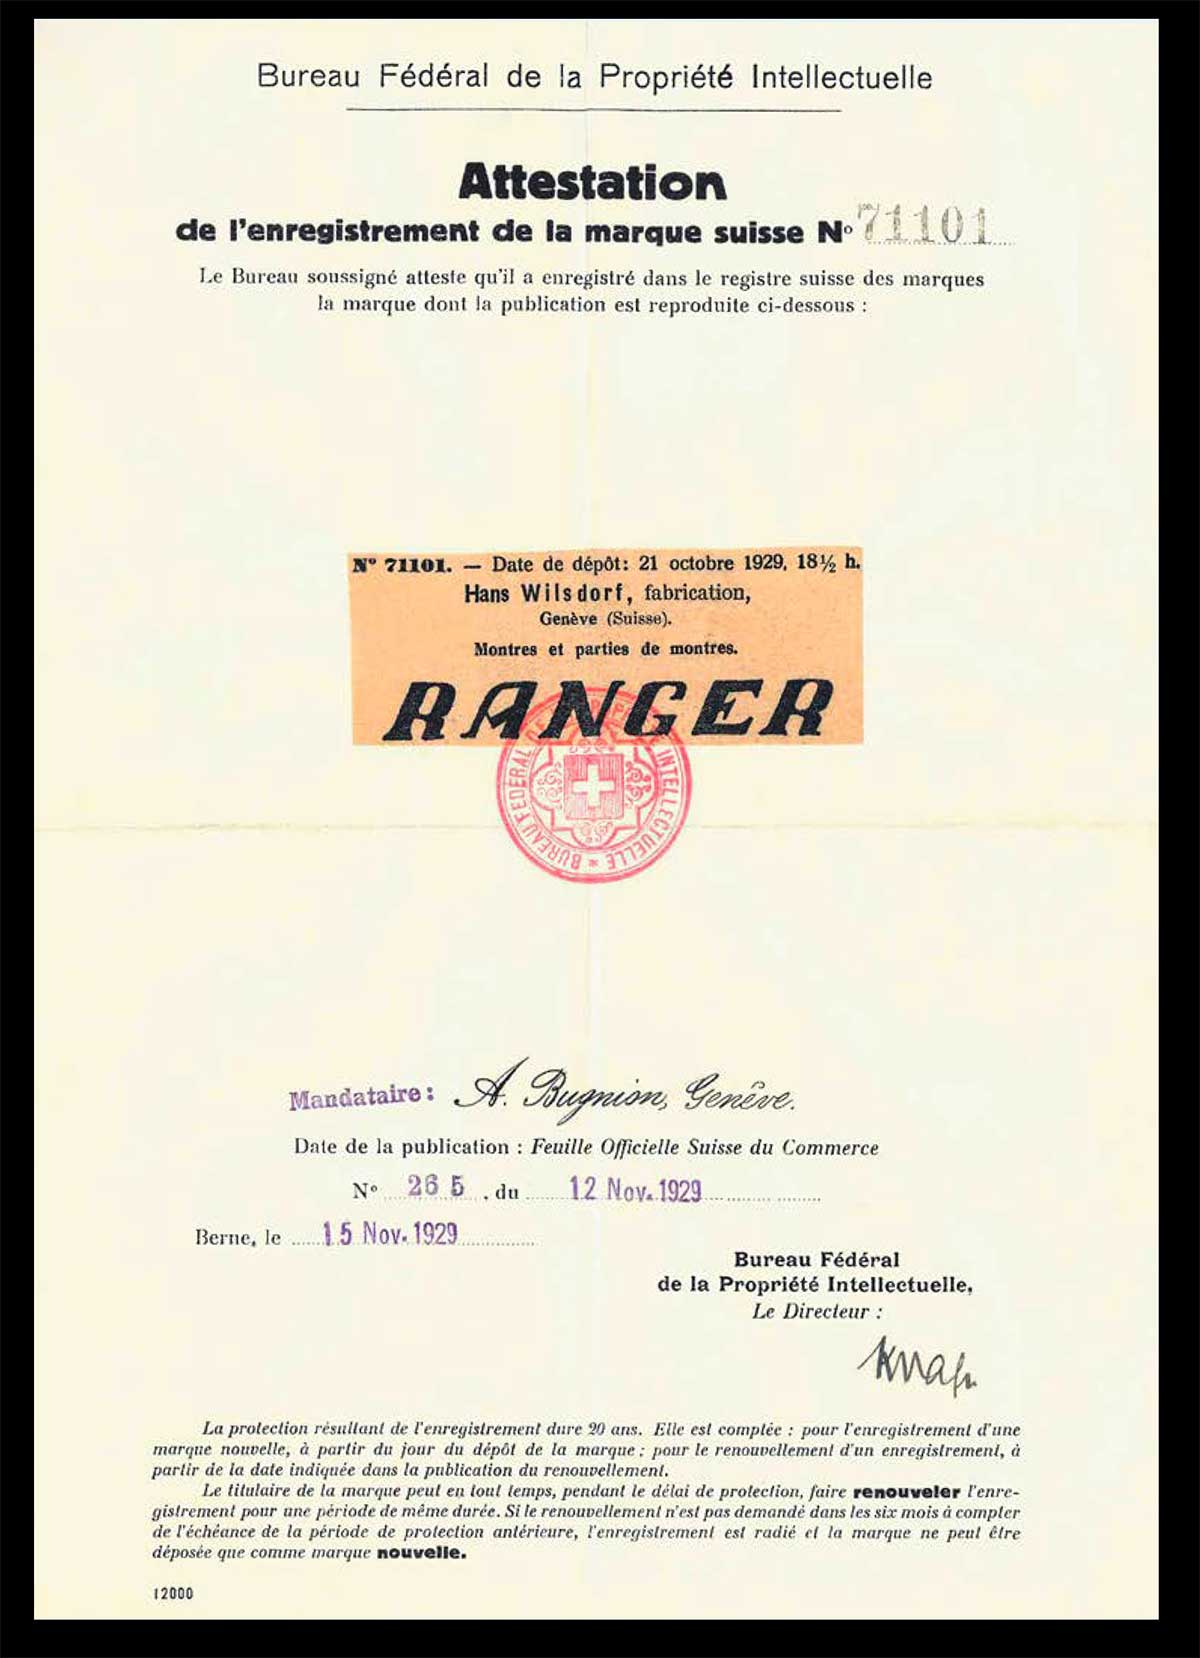 Patente del nombre Ranger